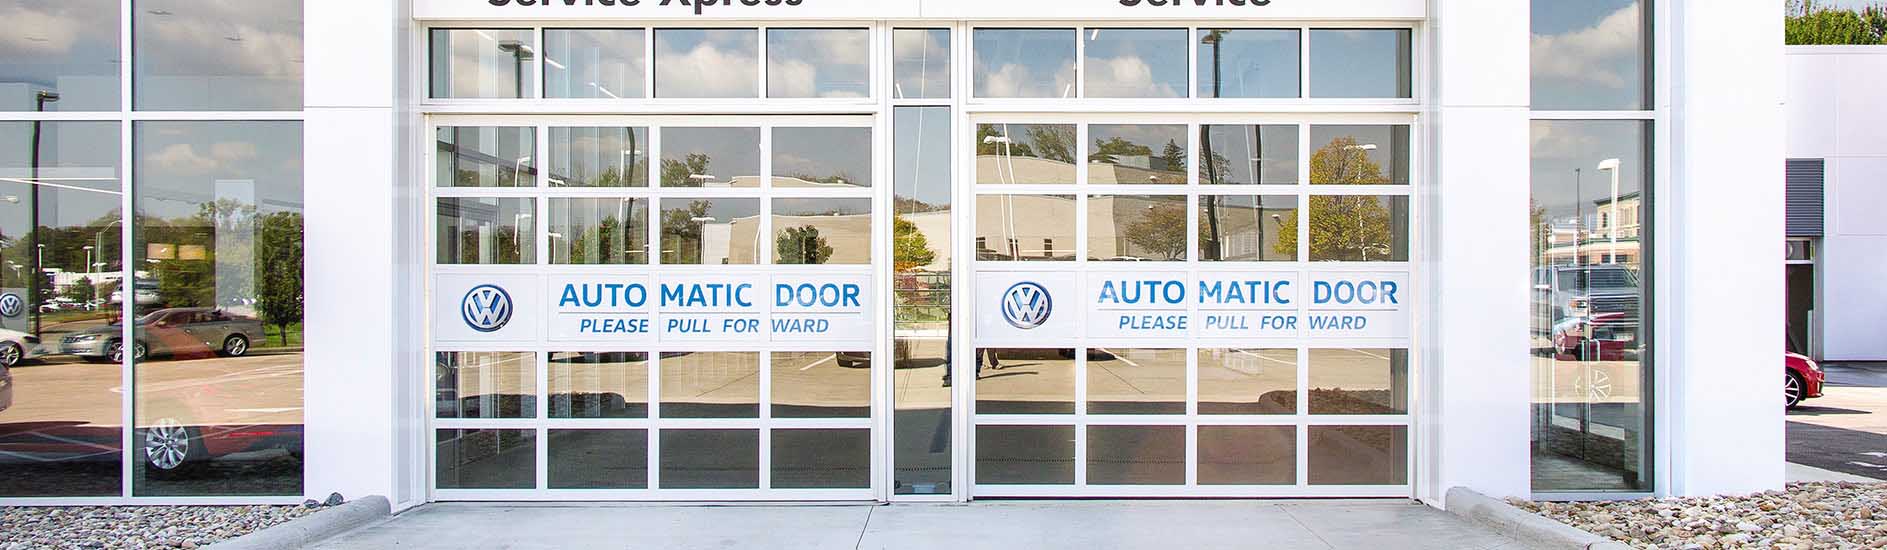 commercial glass doors with aluminum trim